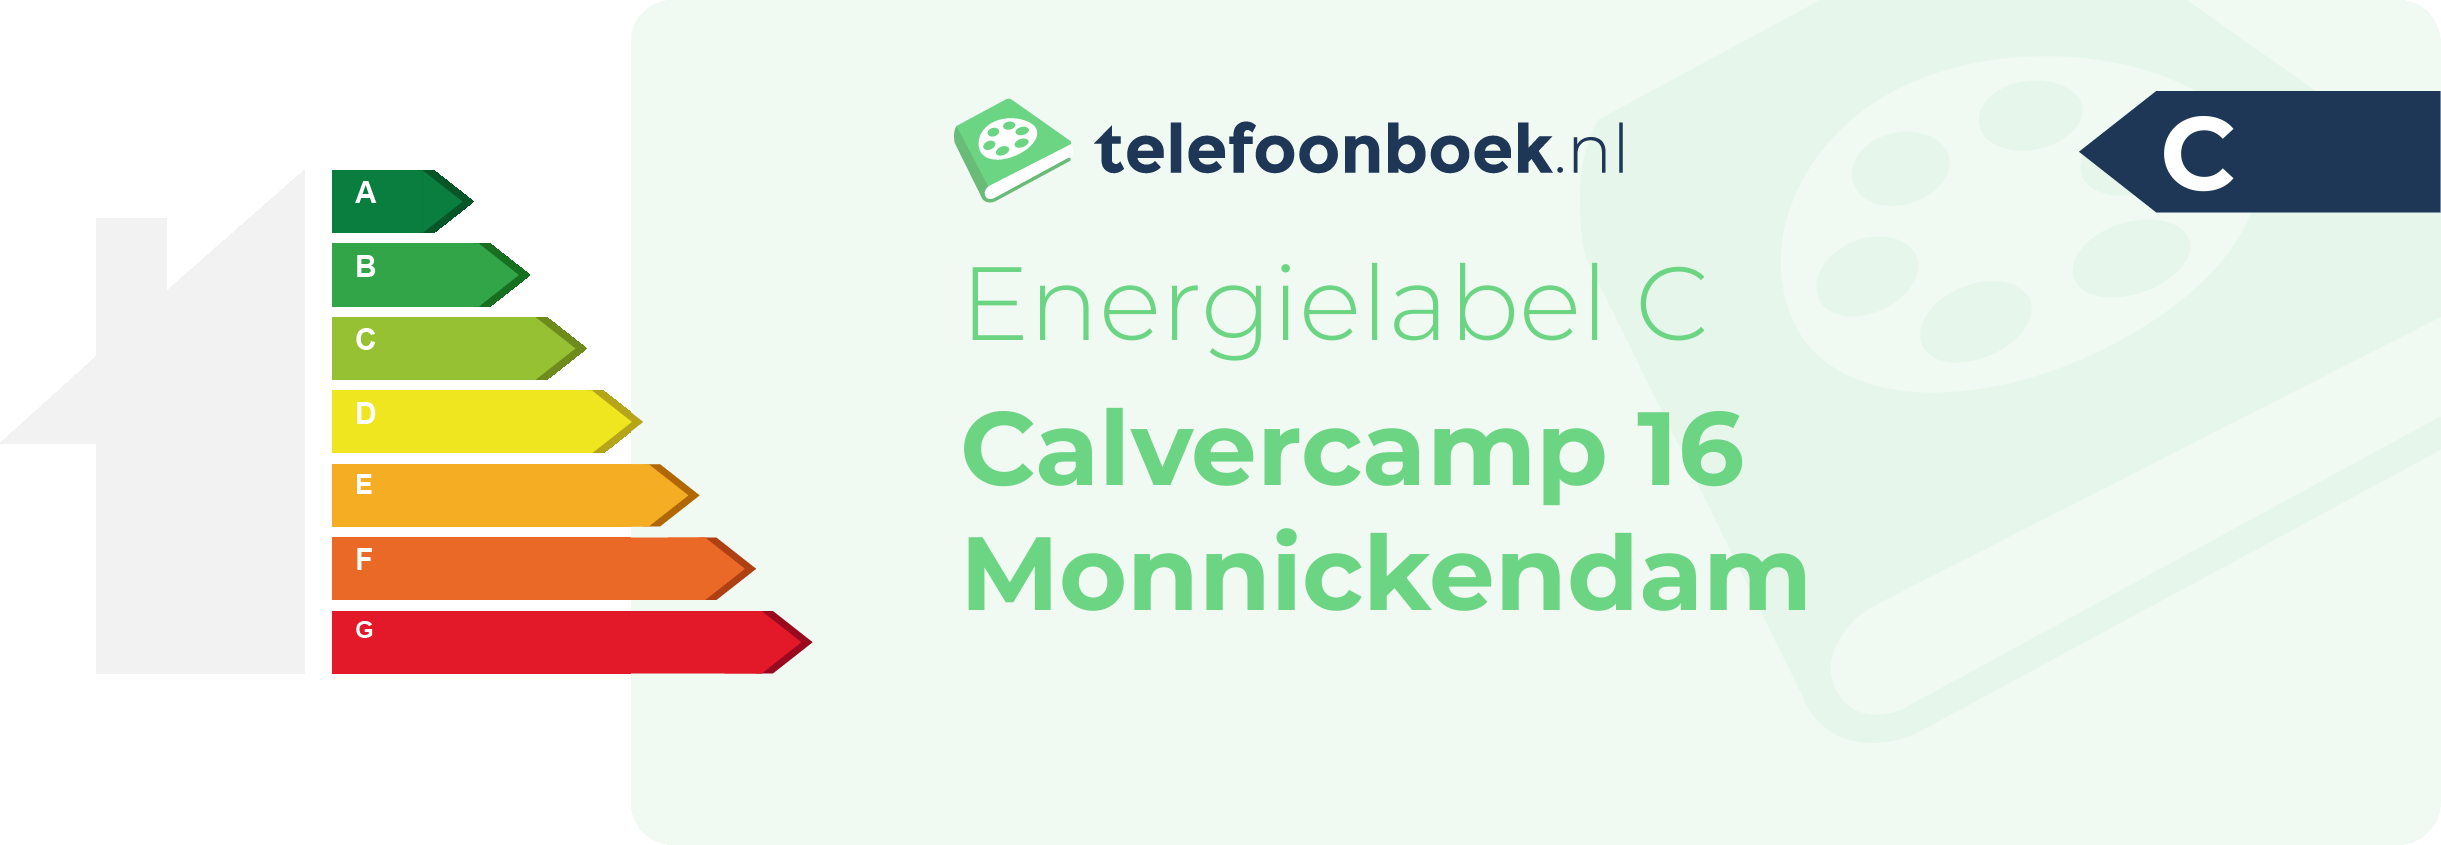 Energielabel Calvercamp 16 Monnickendam